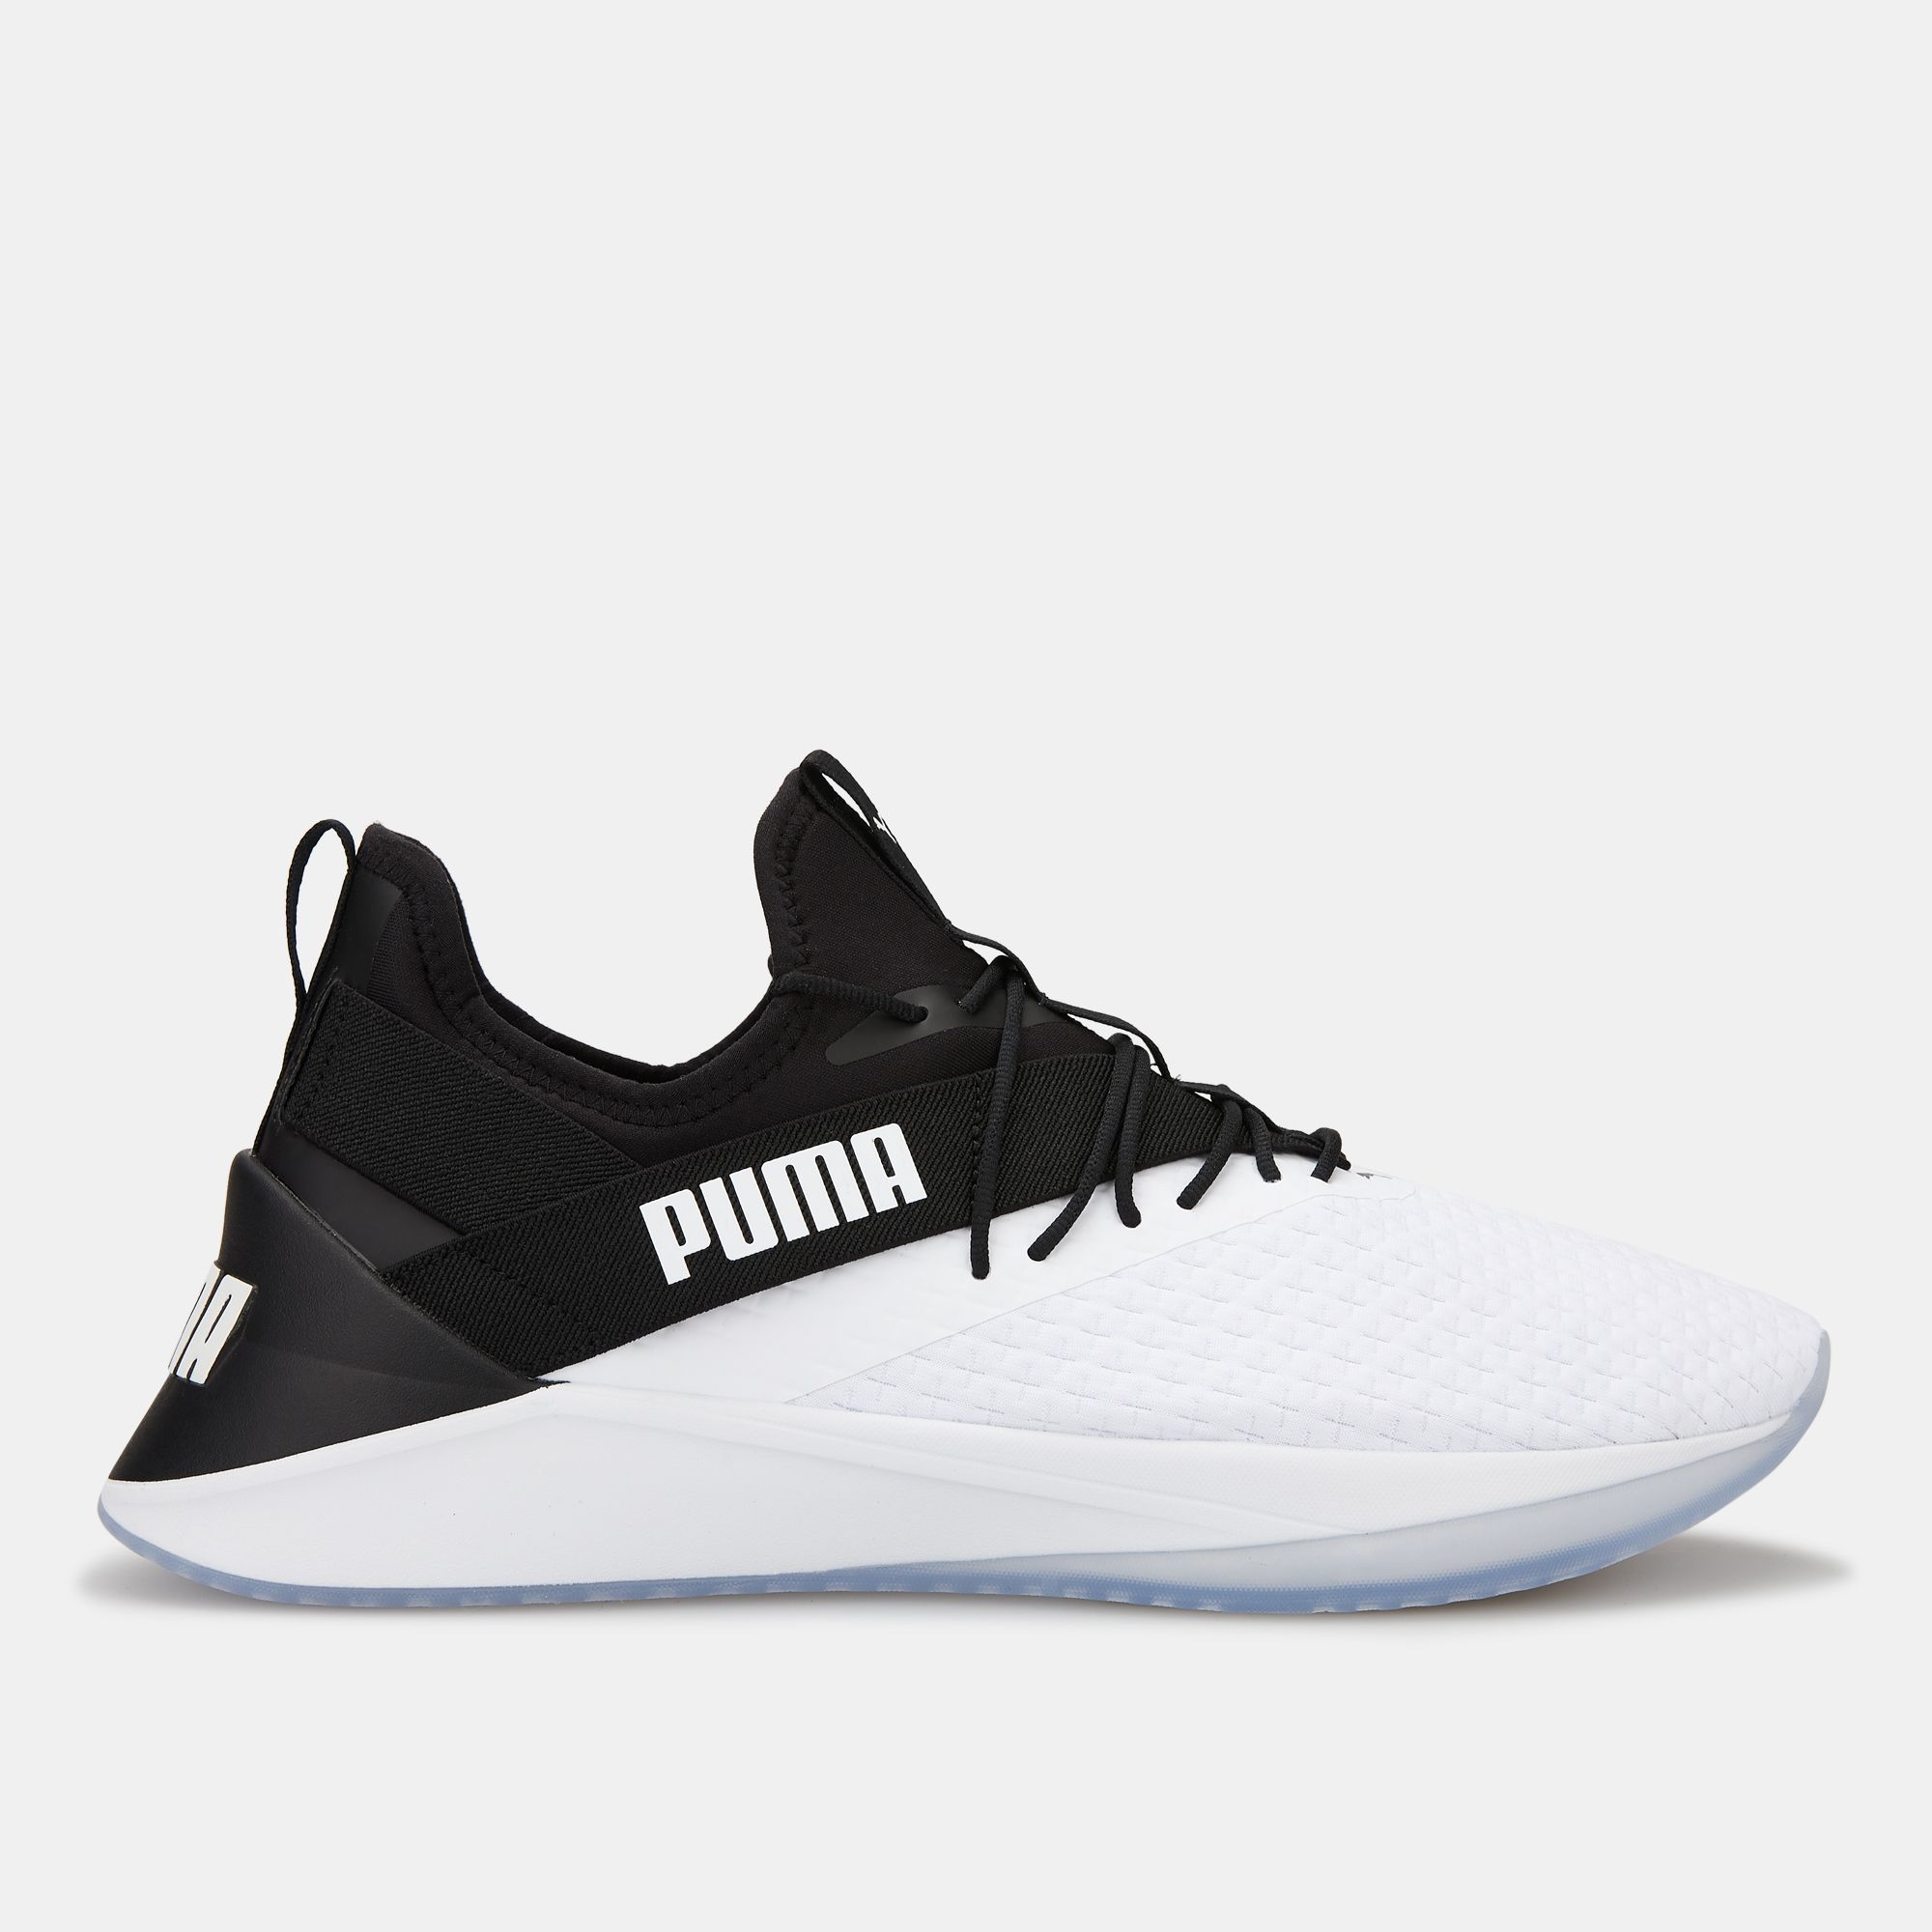 puma shoes for training